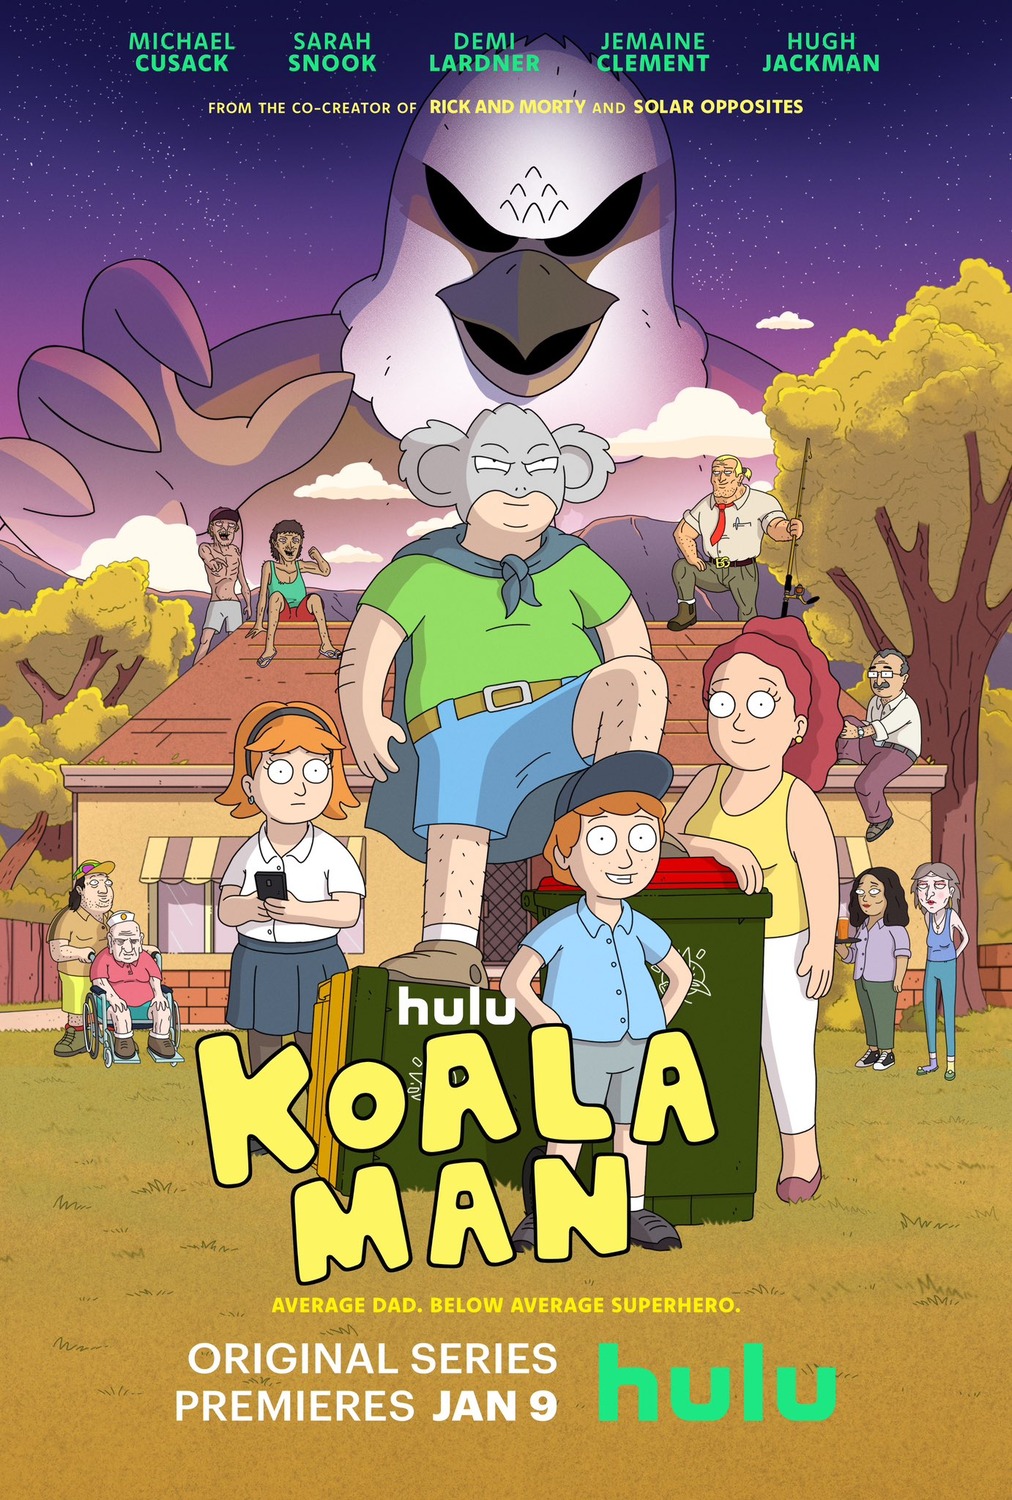 Extra Large TV Poster Image for Koala Man 